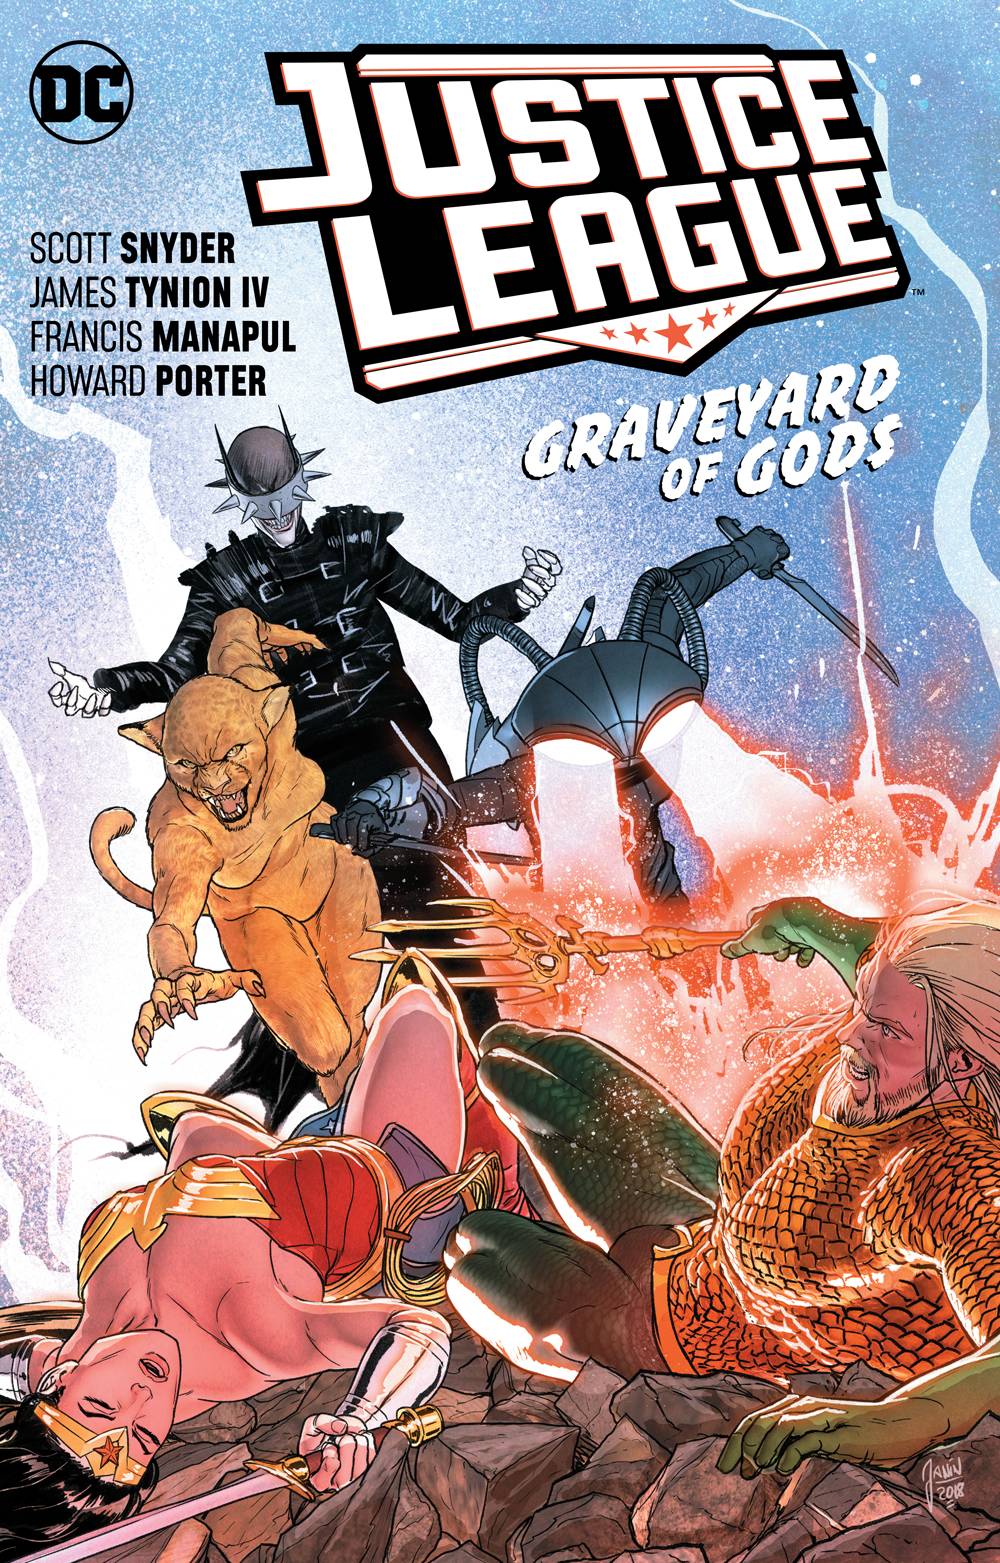 Justice League vol 2: Graveyard Of Gods s/c (Rebirth)